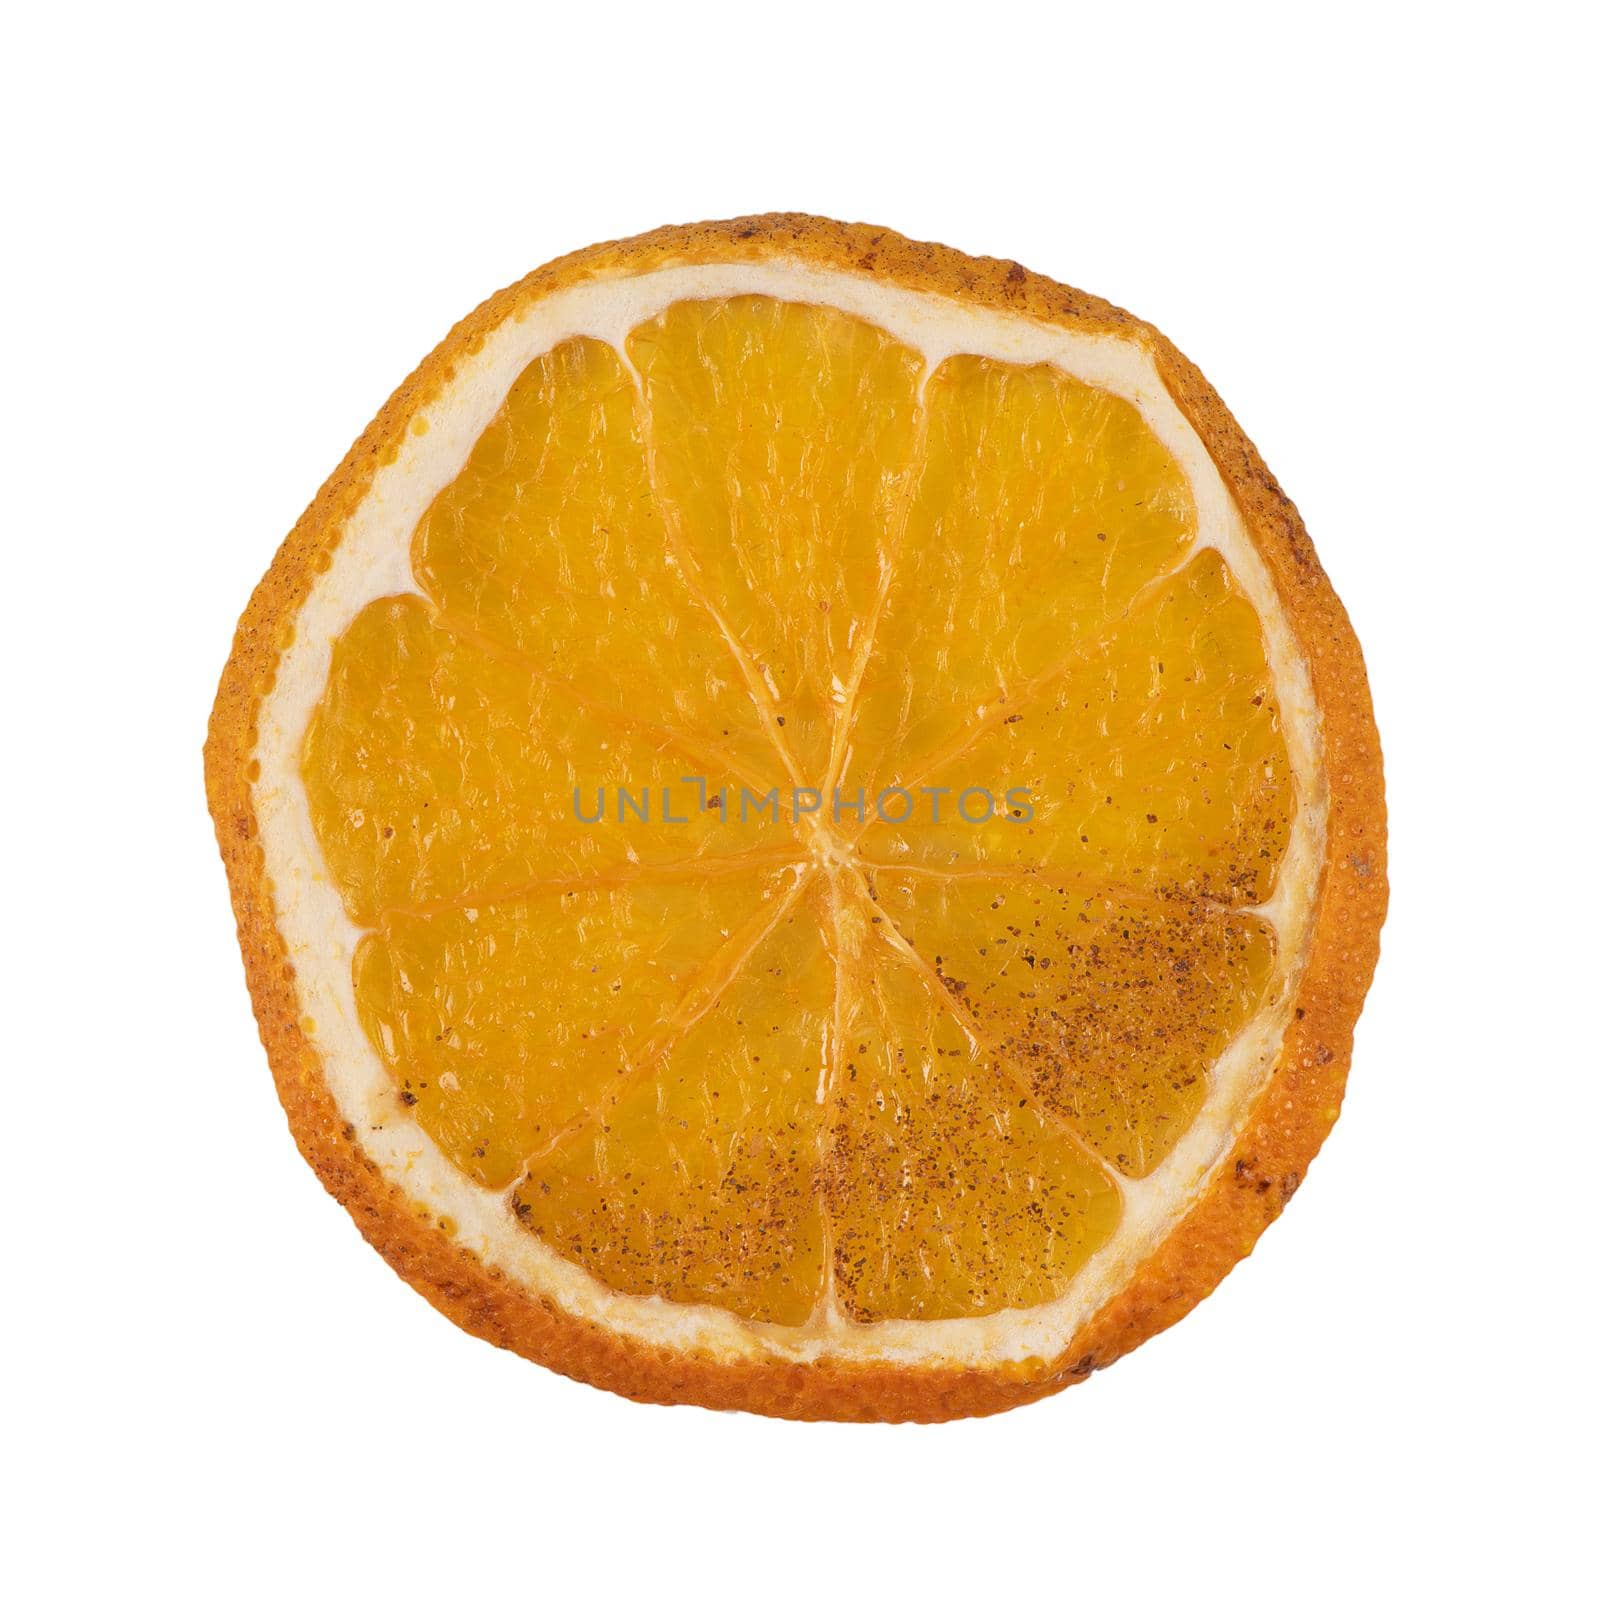 Dried slice of orange by homydesign